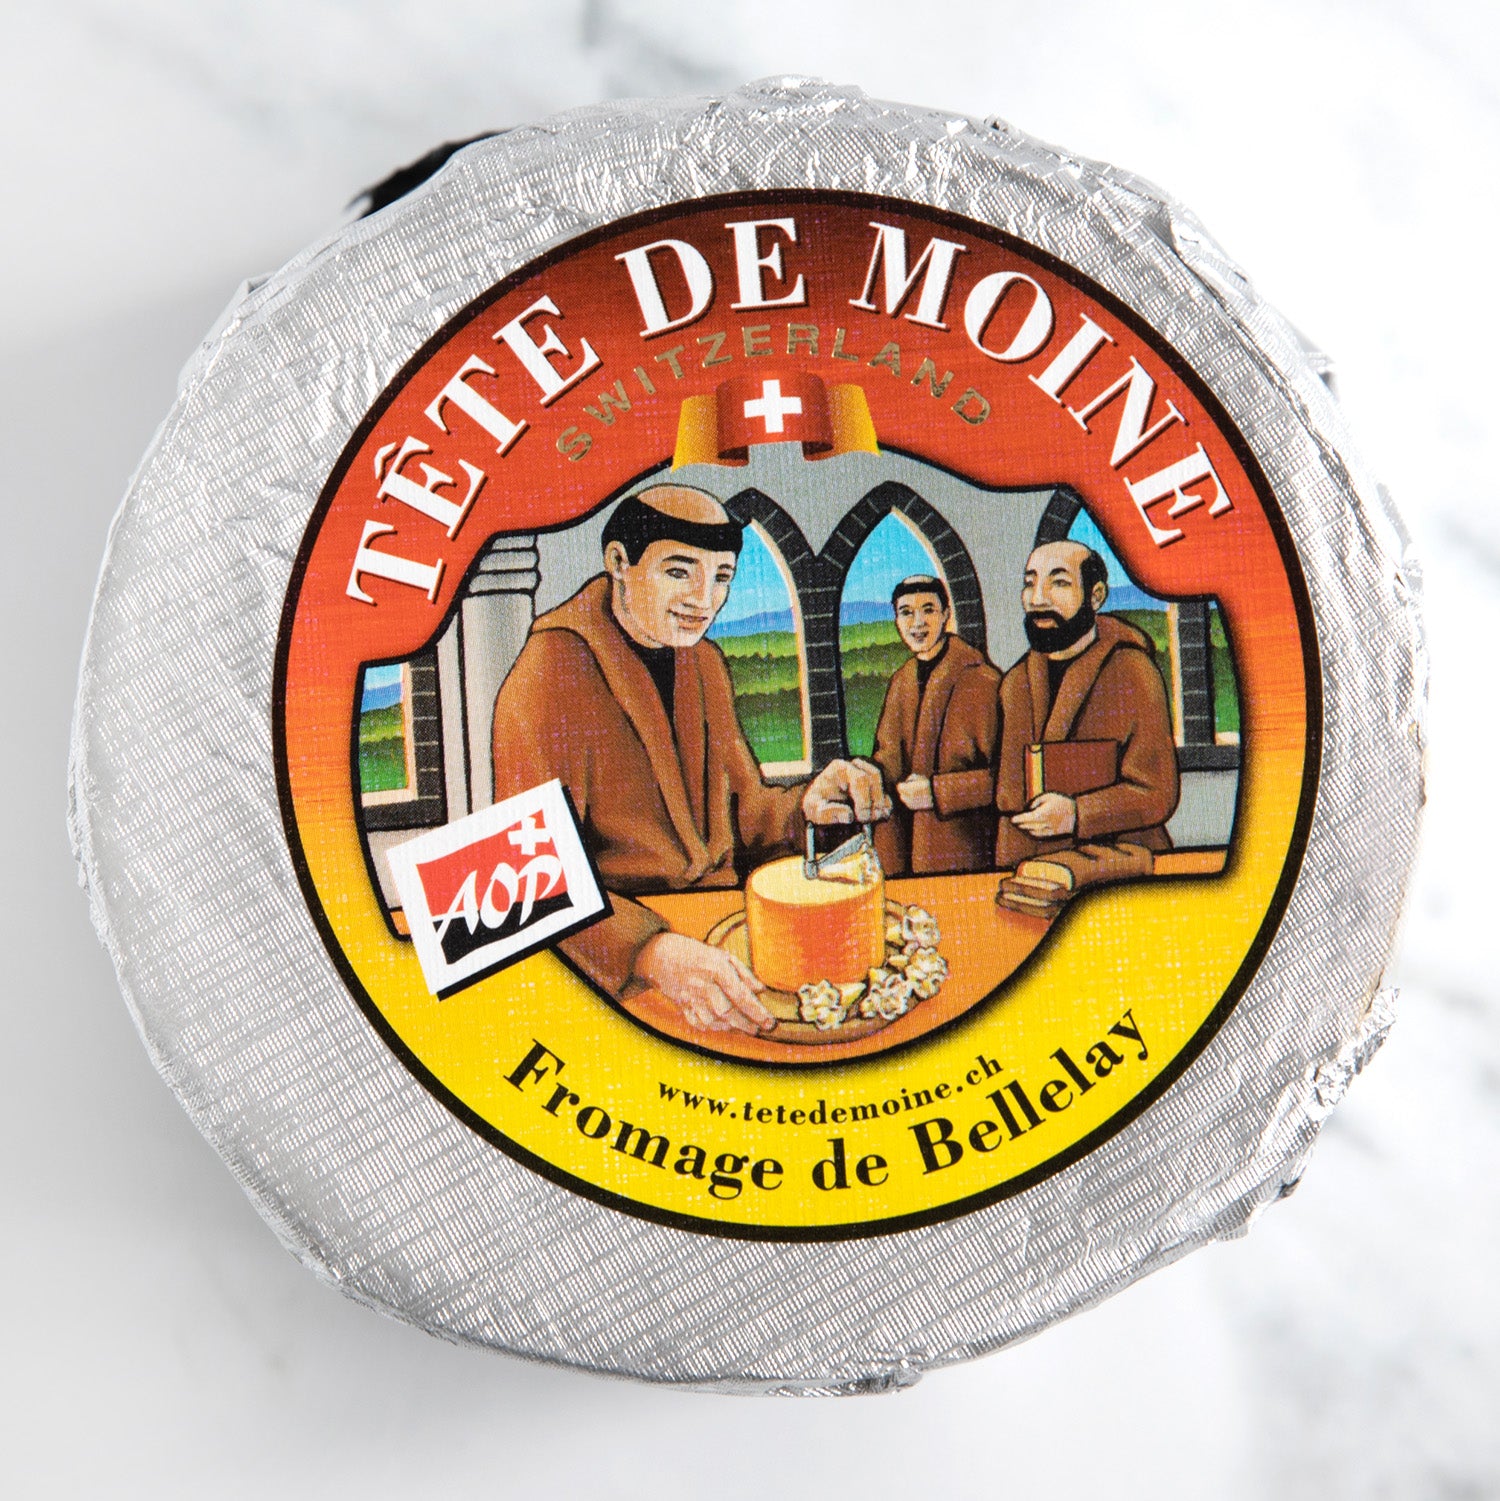 Tête de Moine - Whole Cheese | Premium Quality | 850g - 1.87 lbs